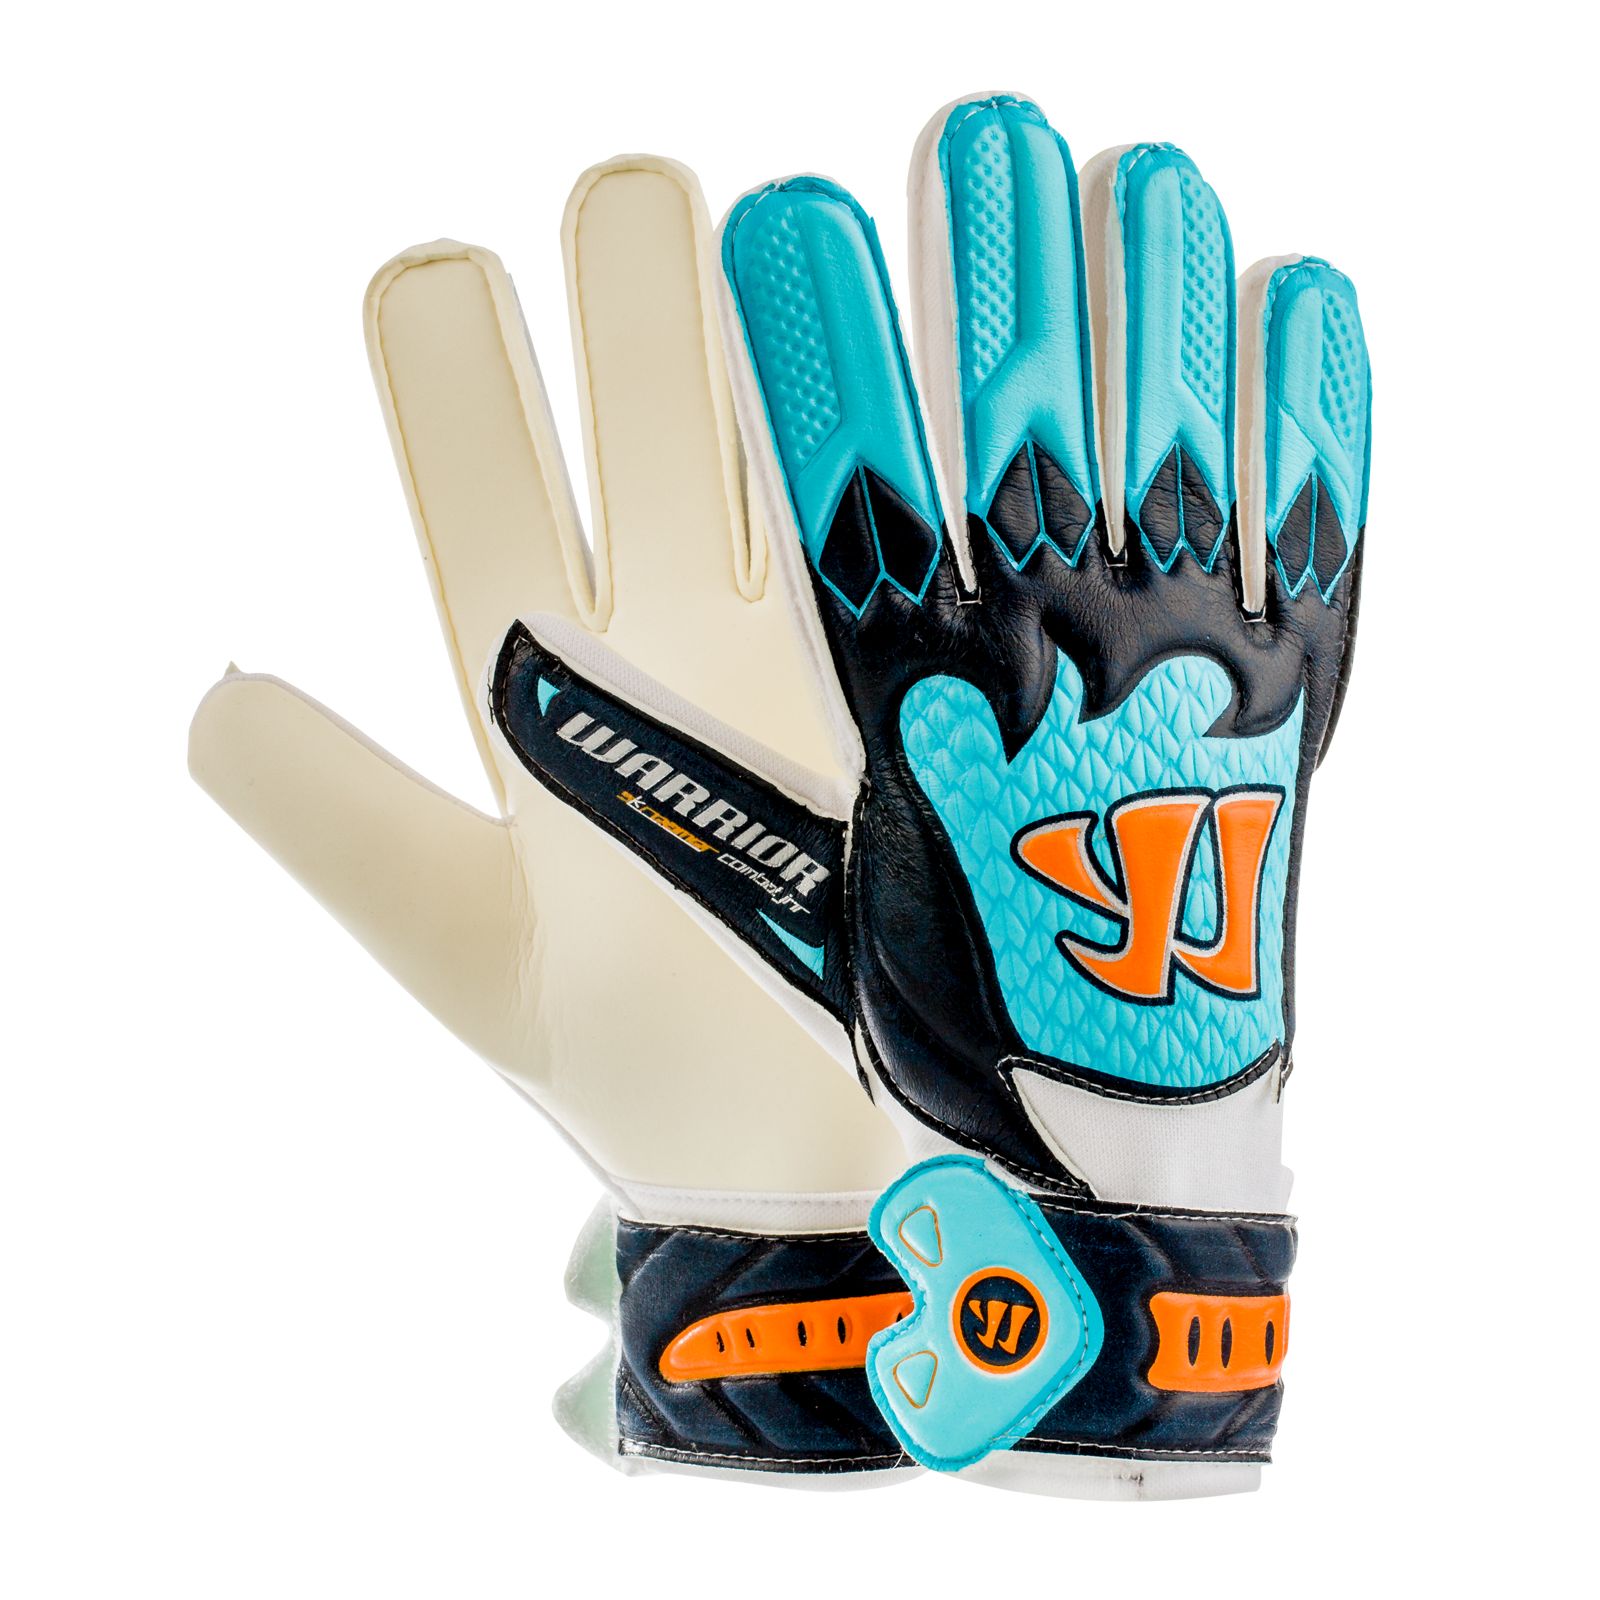 Skreamer Combat Junior Goalkeeper Gloves, White with Blue Radiance & Insignia Blue image number 1